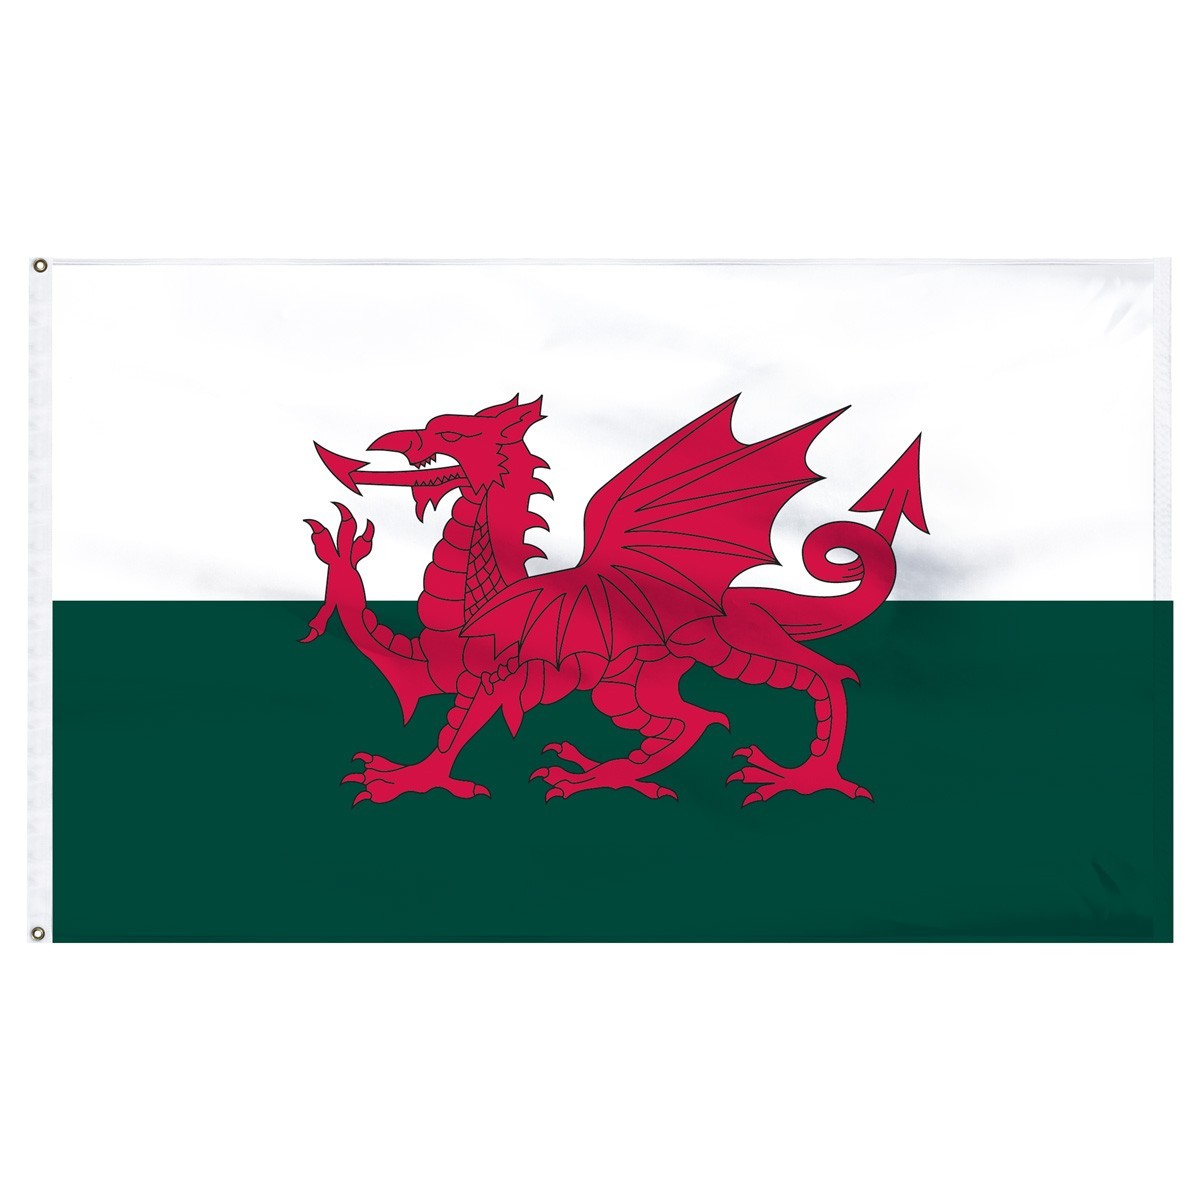 Bandera de nailon para exteriores de Gales de 2 pies x 3 pies